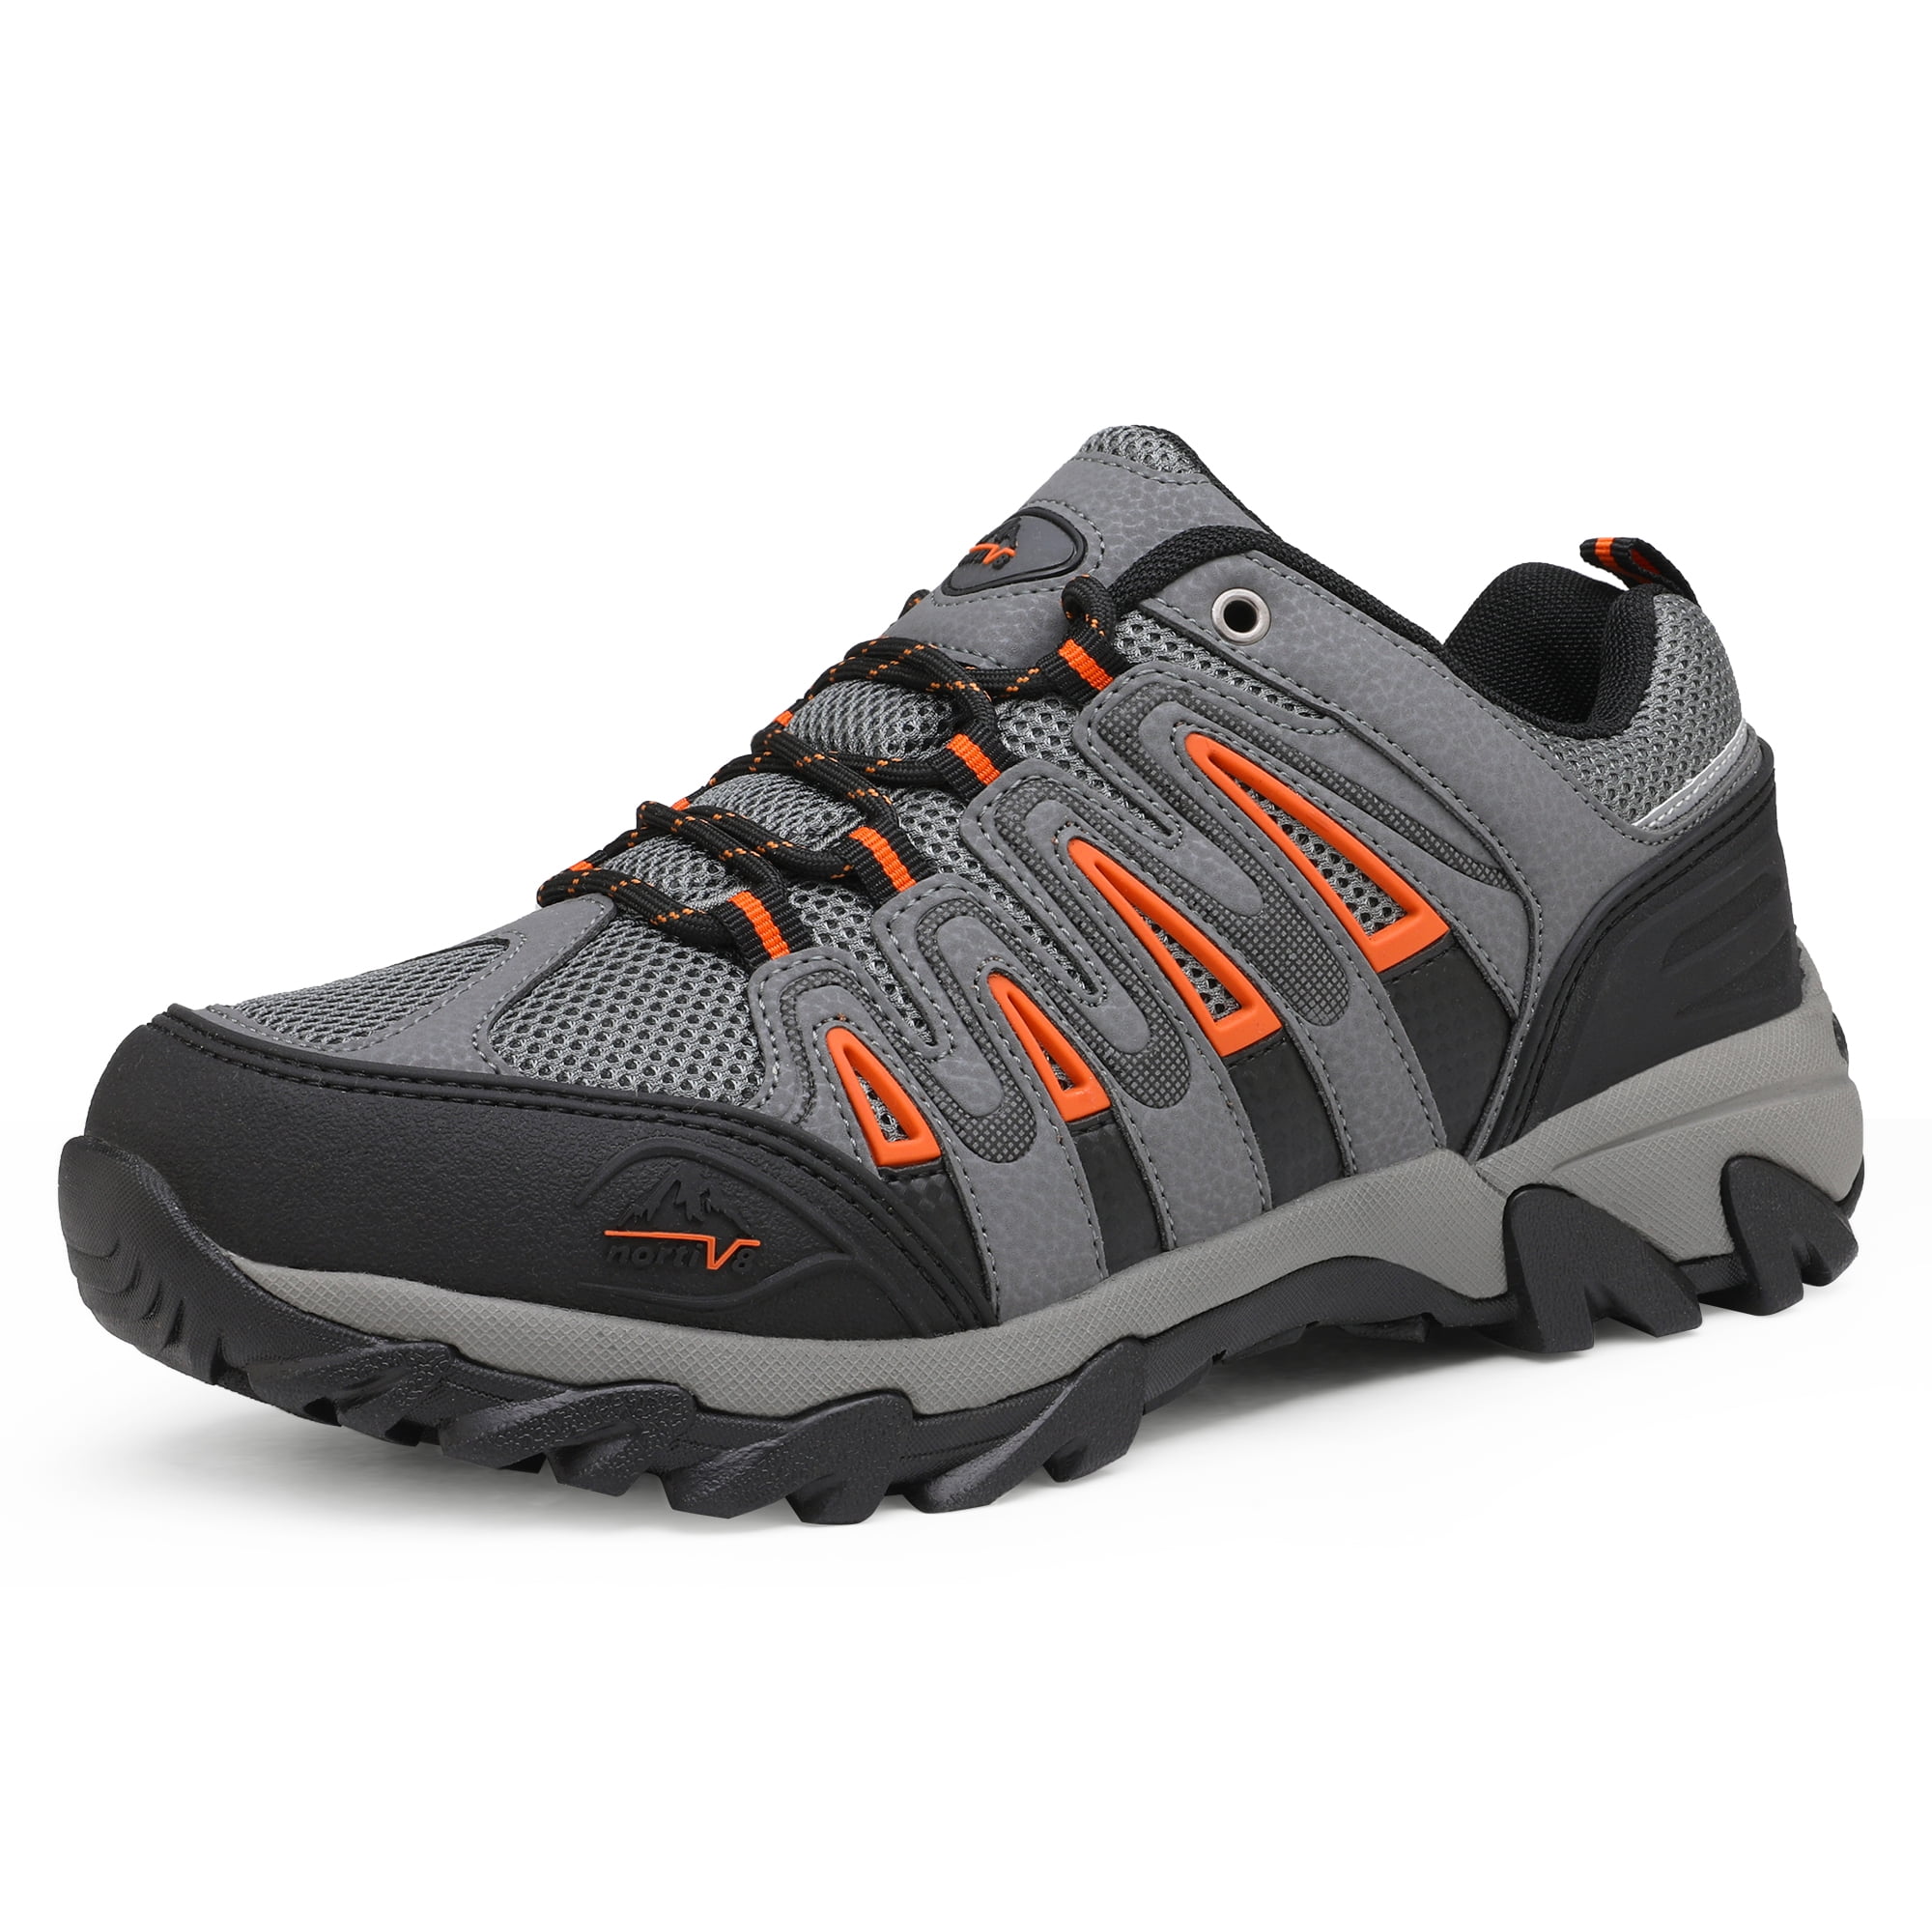 Mens waterproof comfortable lightweight outdoor walking hiking trail work shoes 